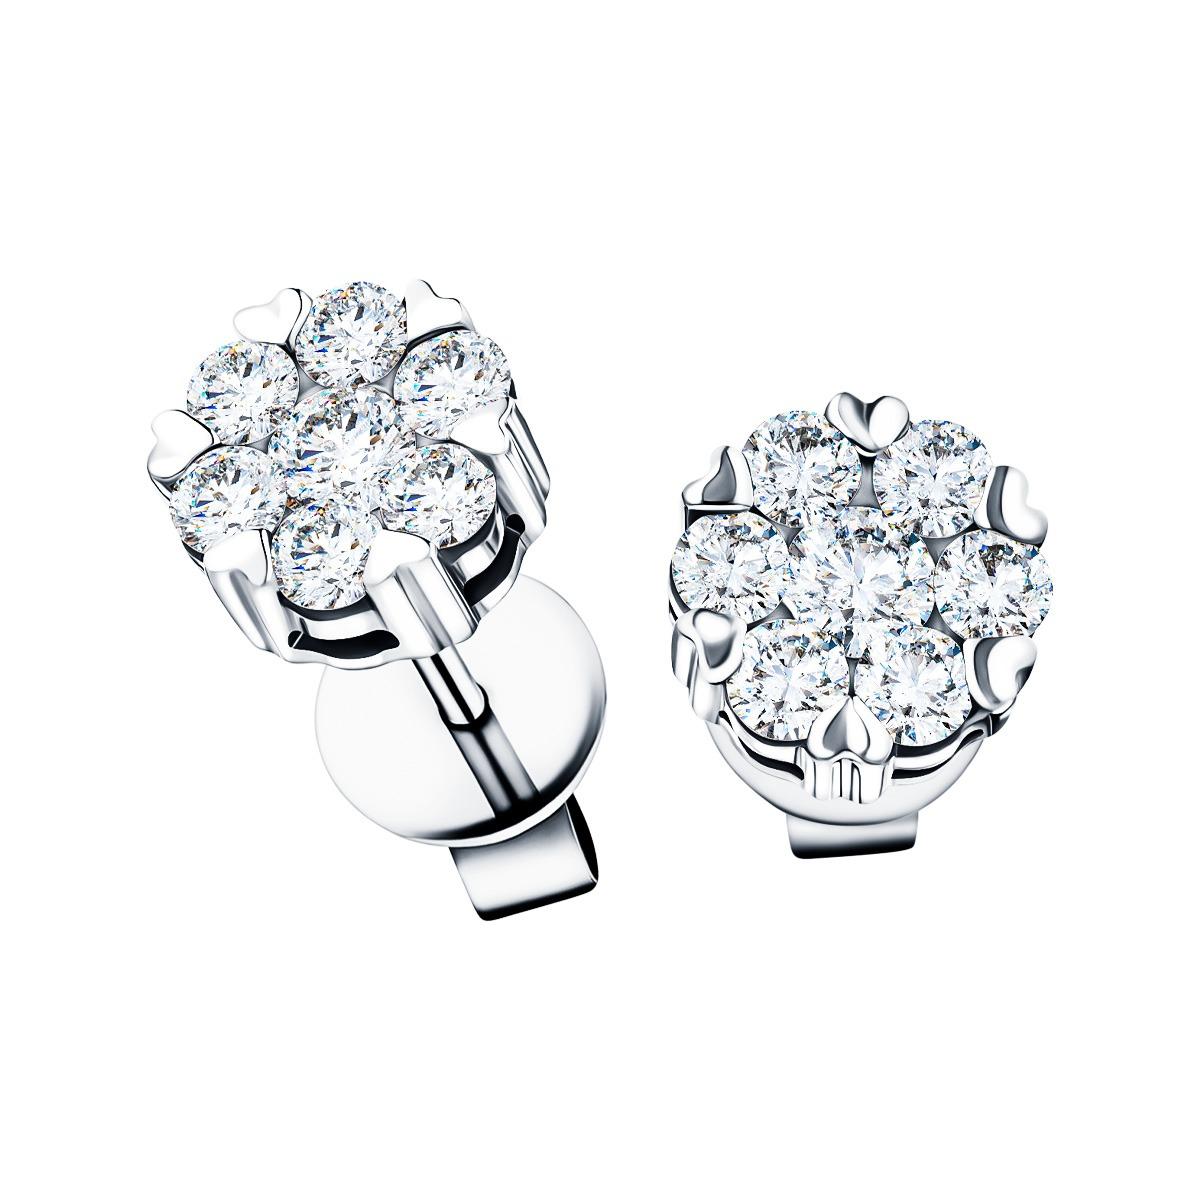 0.35 carat diamond earrings